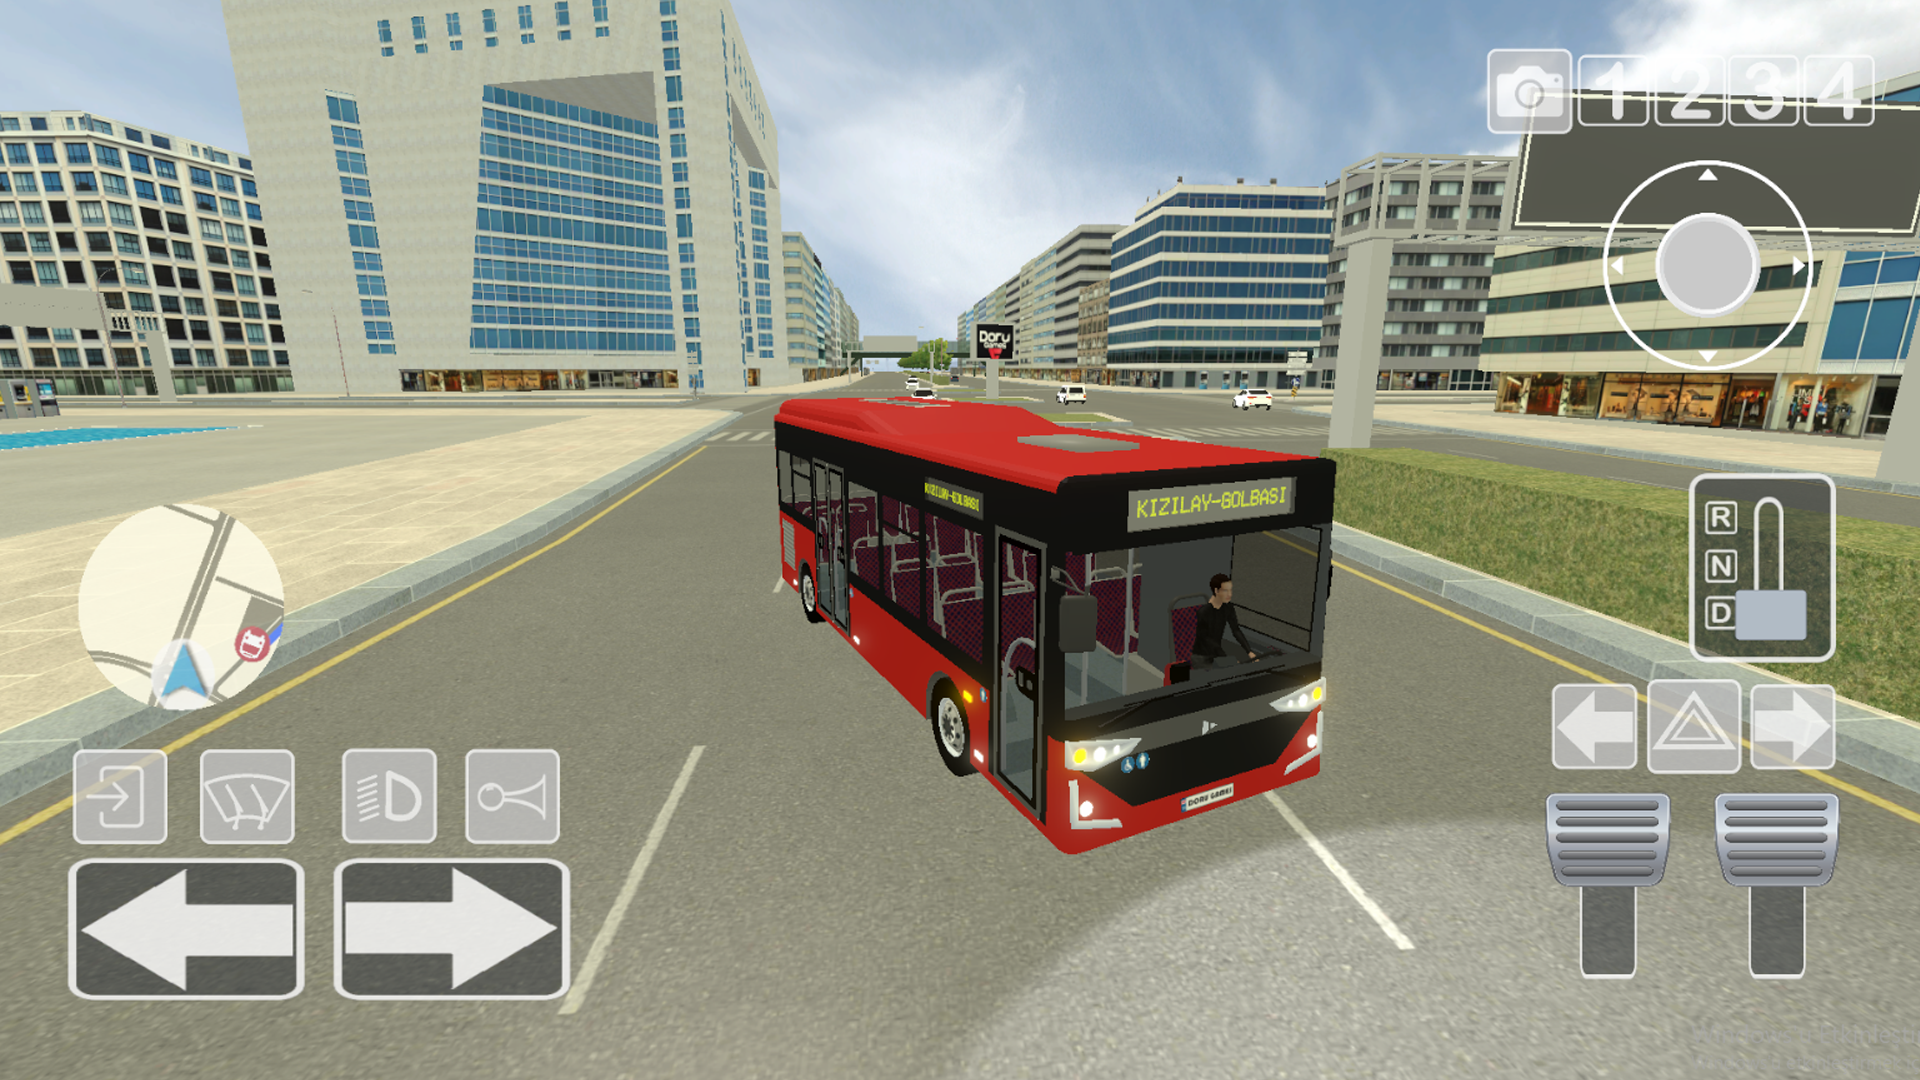 Metro Bus Simulator: Jogue Metro Bus Simulator gratuitamente